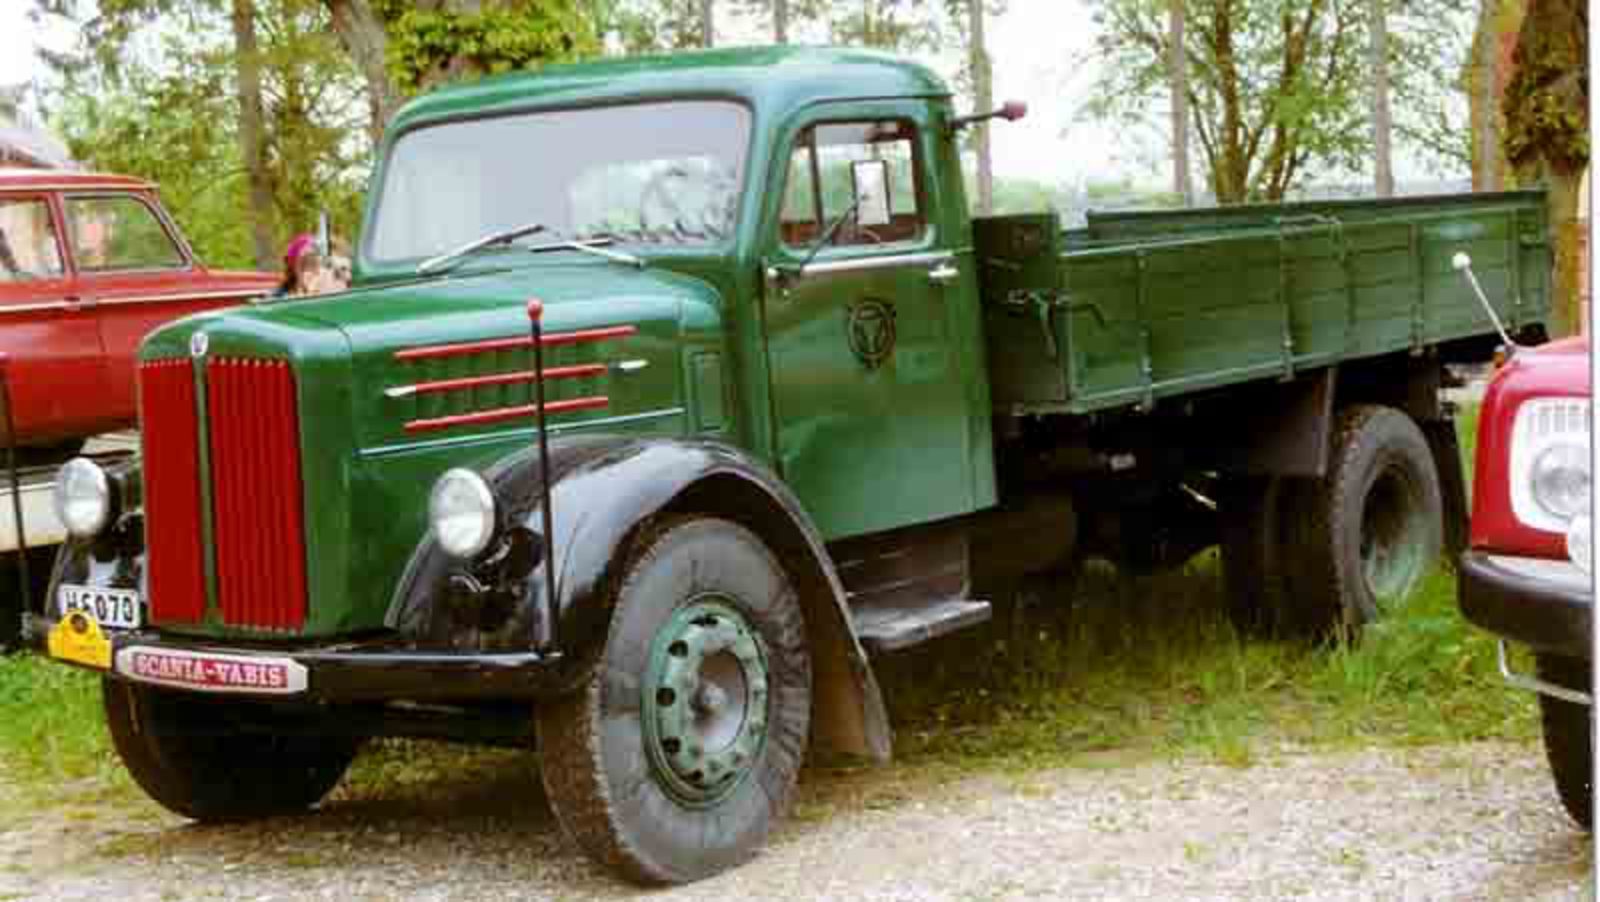 File:Scania-Vabis L51 Truck 1959 2.jpg - Wikimedia Commons